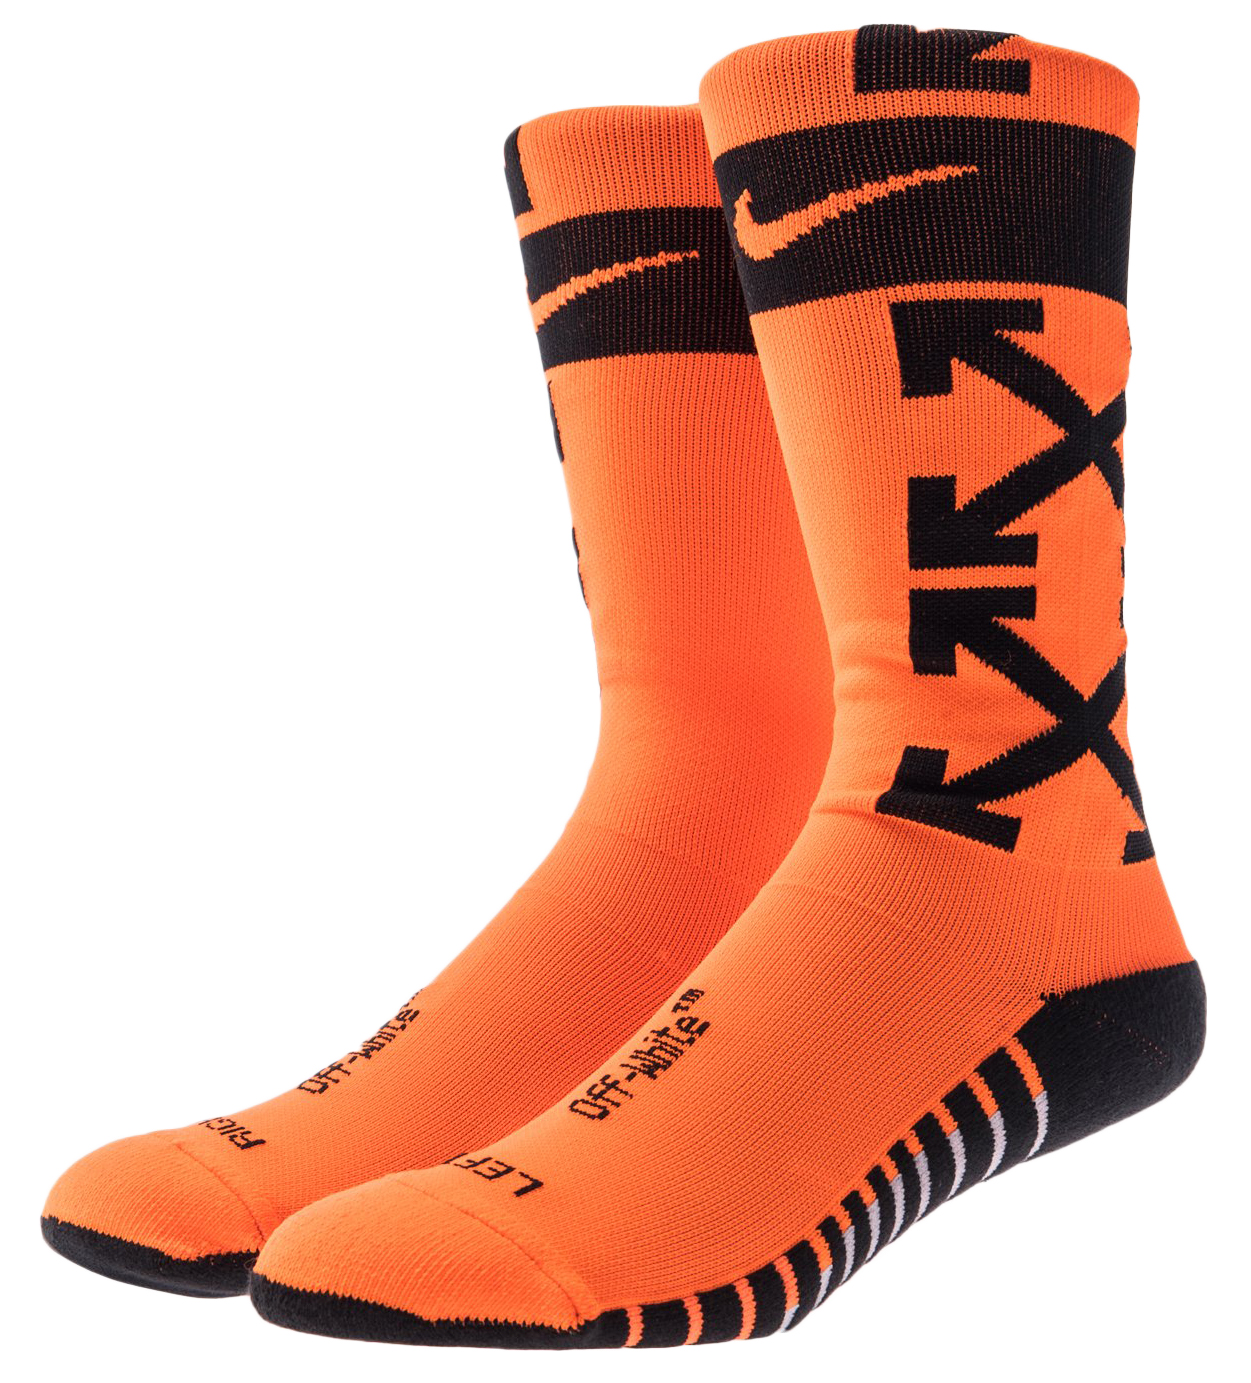 Nikelab x OFF-WHITE FB Socks Orange - SS18